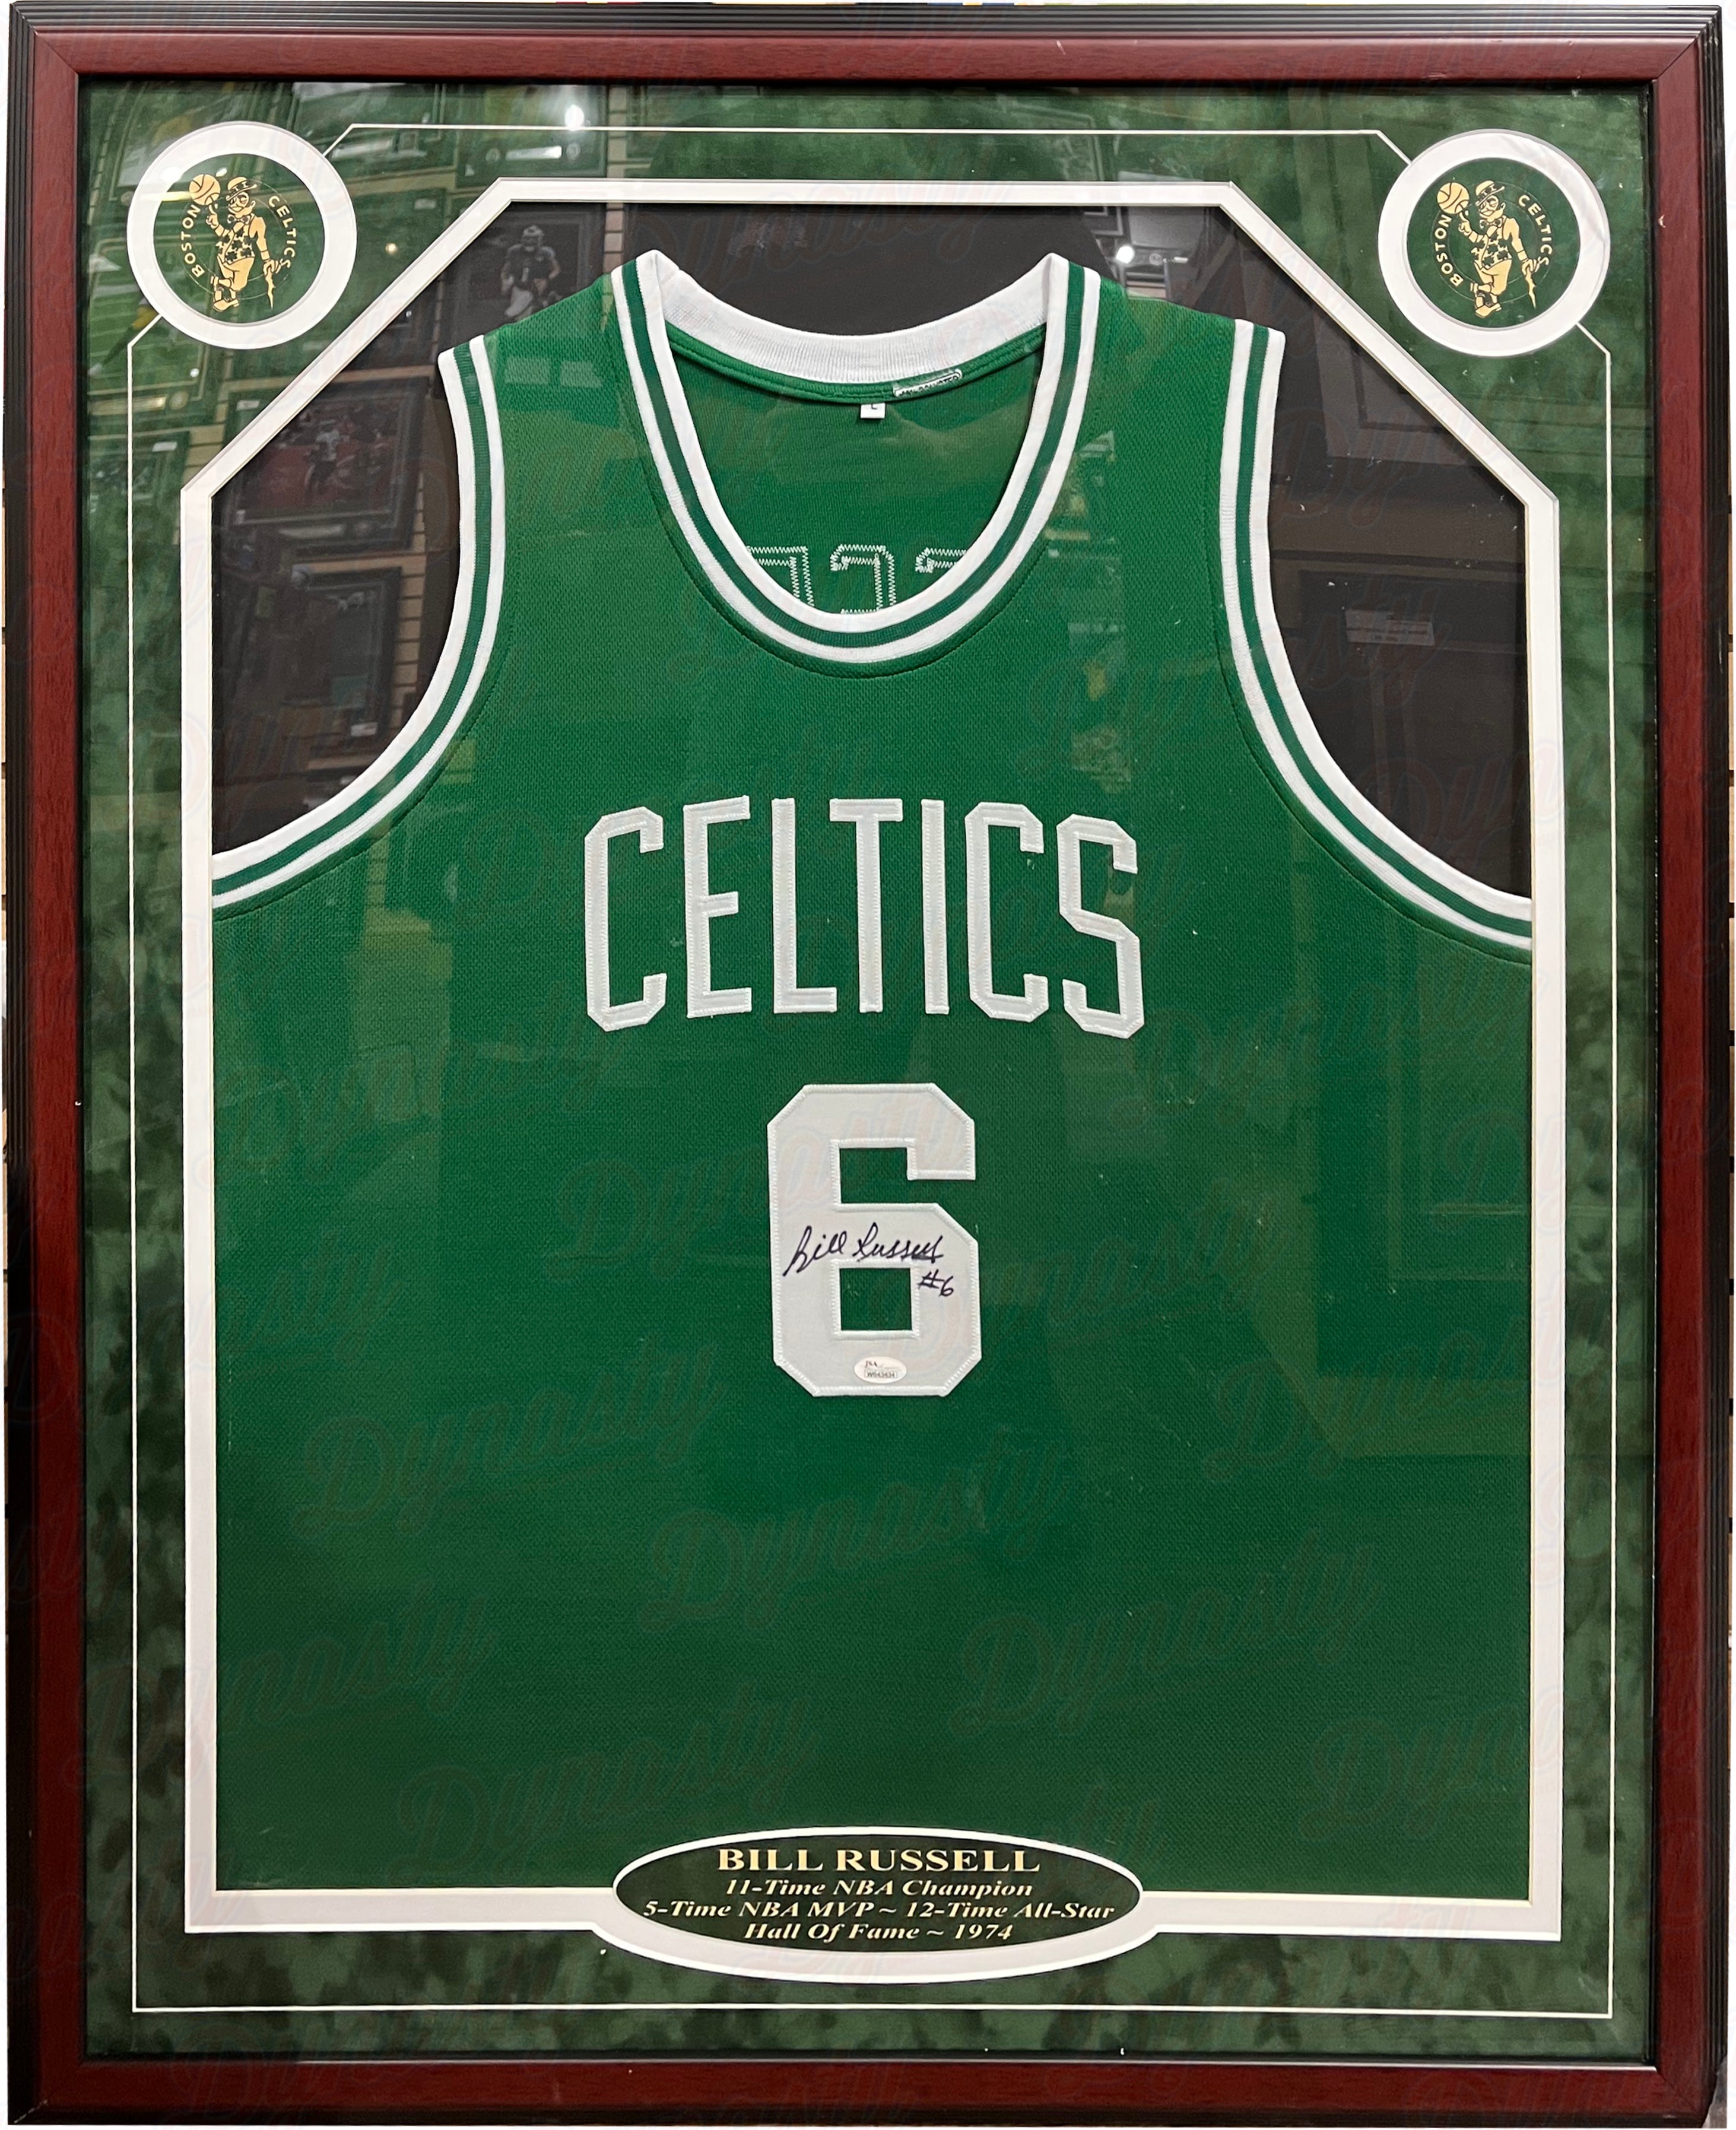 Boston Celtics Jerseys in Boston Celtics Team Shop 